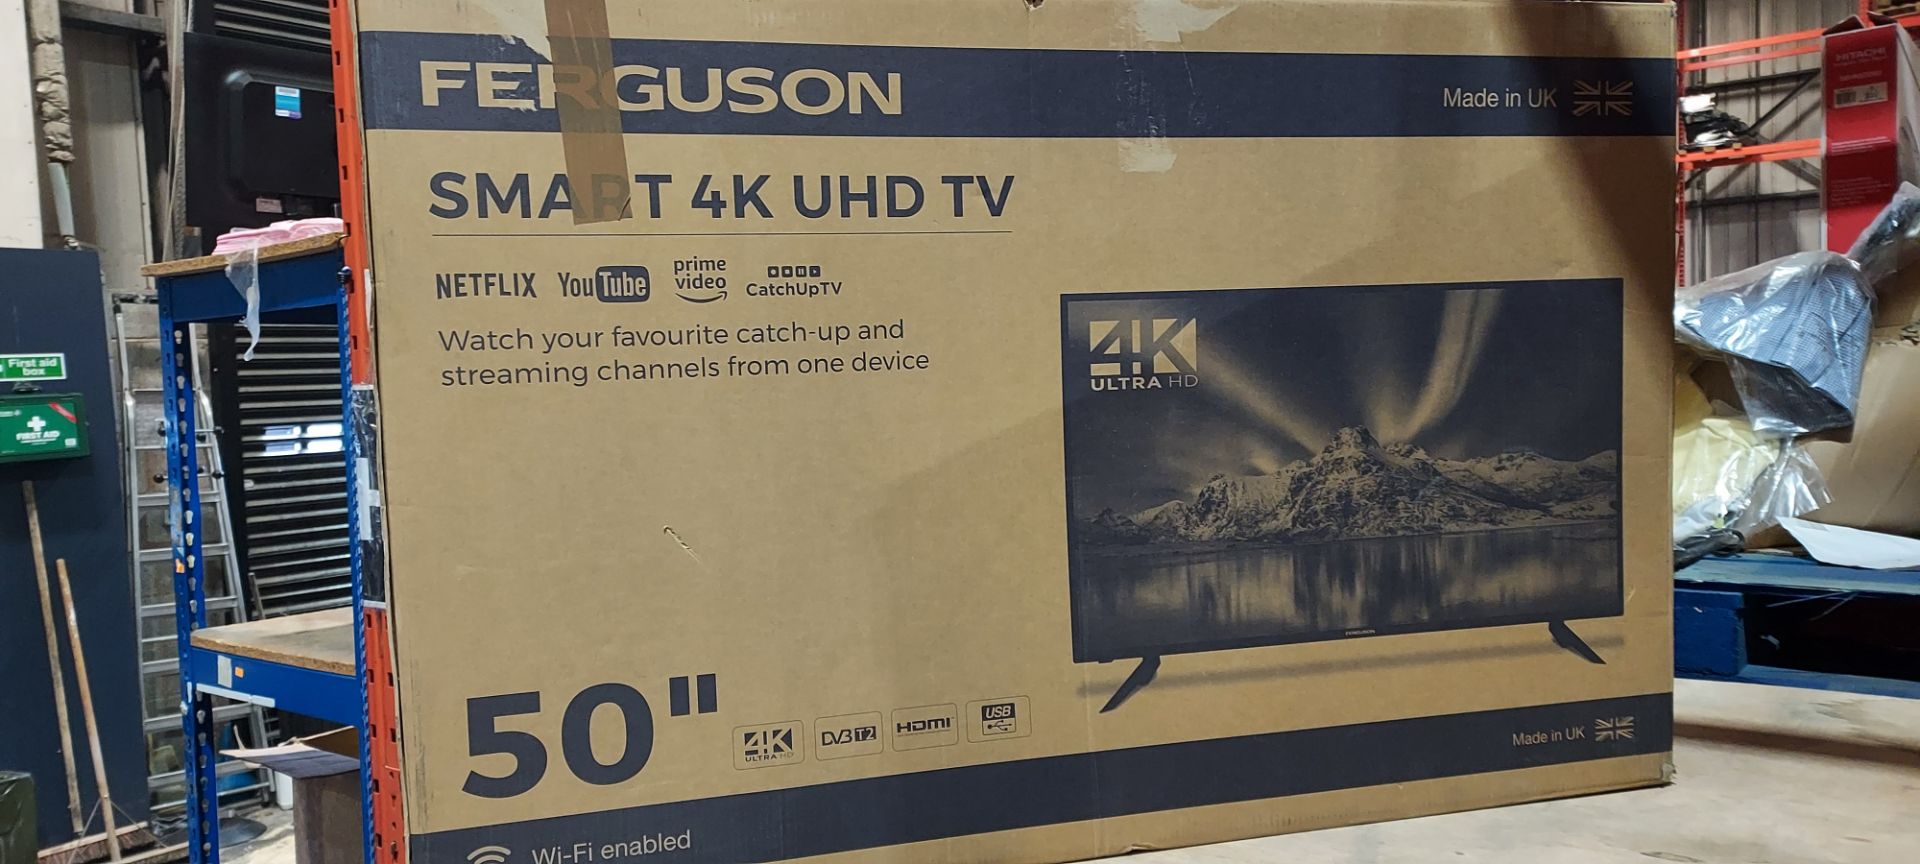 1 X BOXED FERGUSON 50 SMART 4K UHD TV ( MODEL F5022RTX4K) - GRADE A-